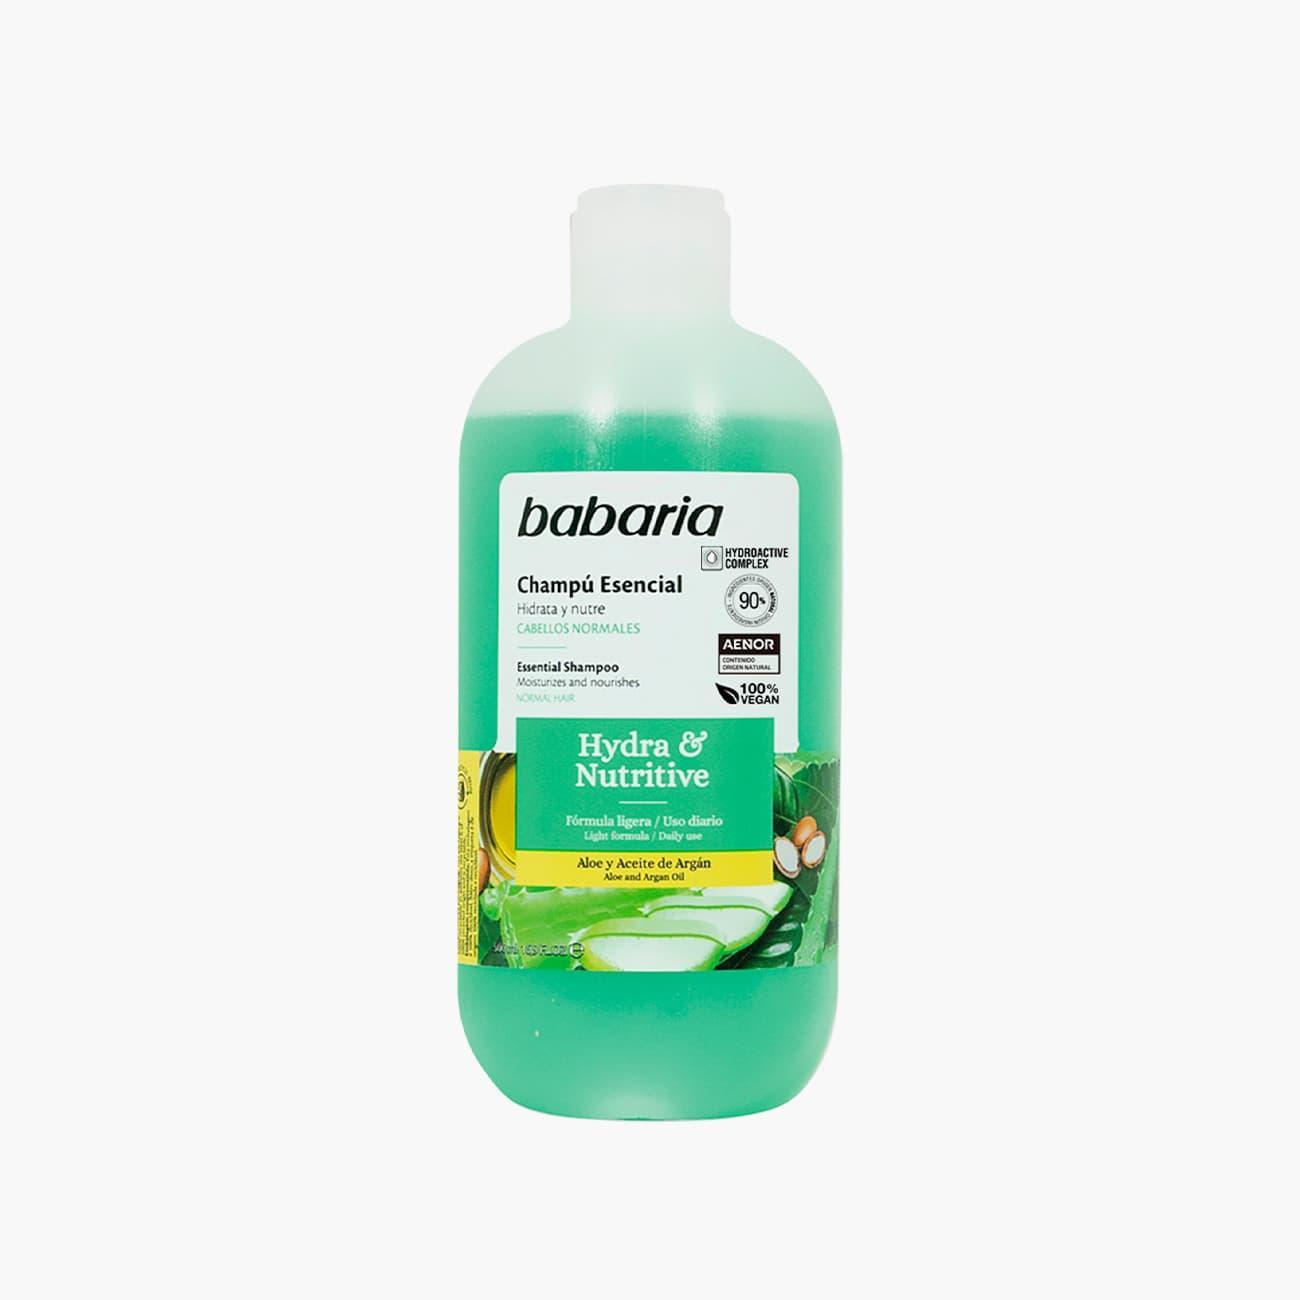 Babaria Hydra & Nutritive Essential Shampoo 500 ml - Mrayti Store